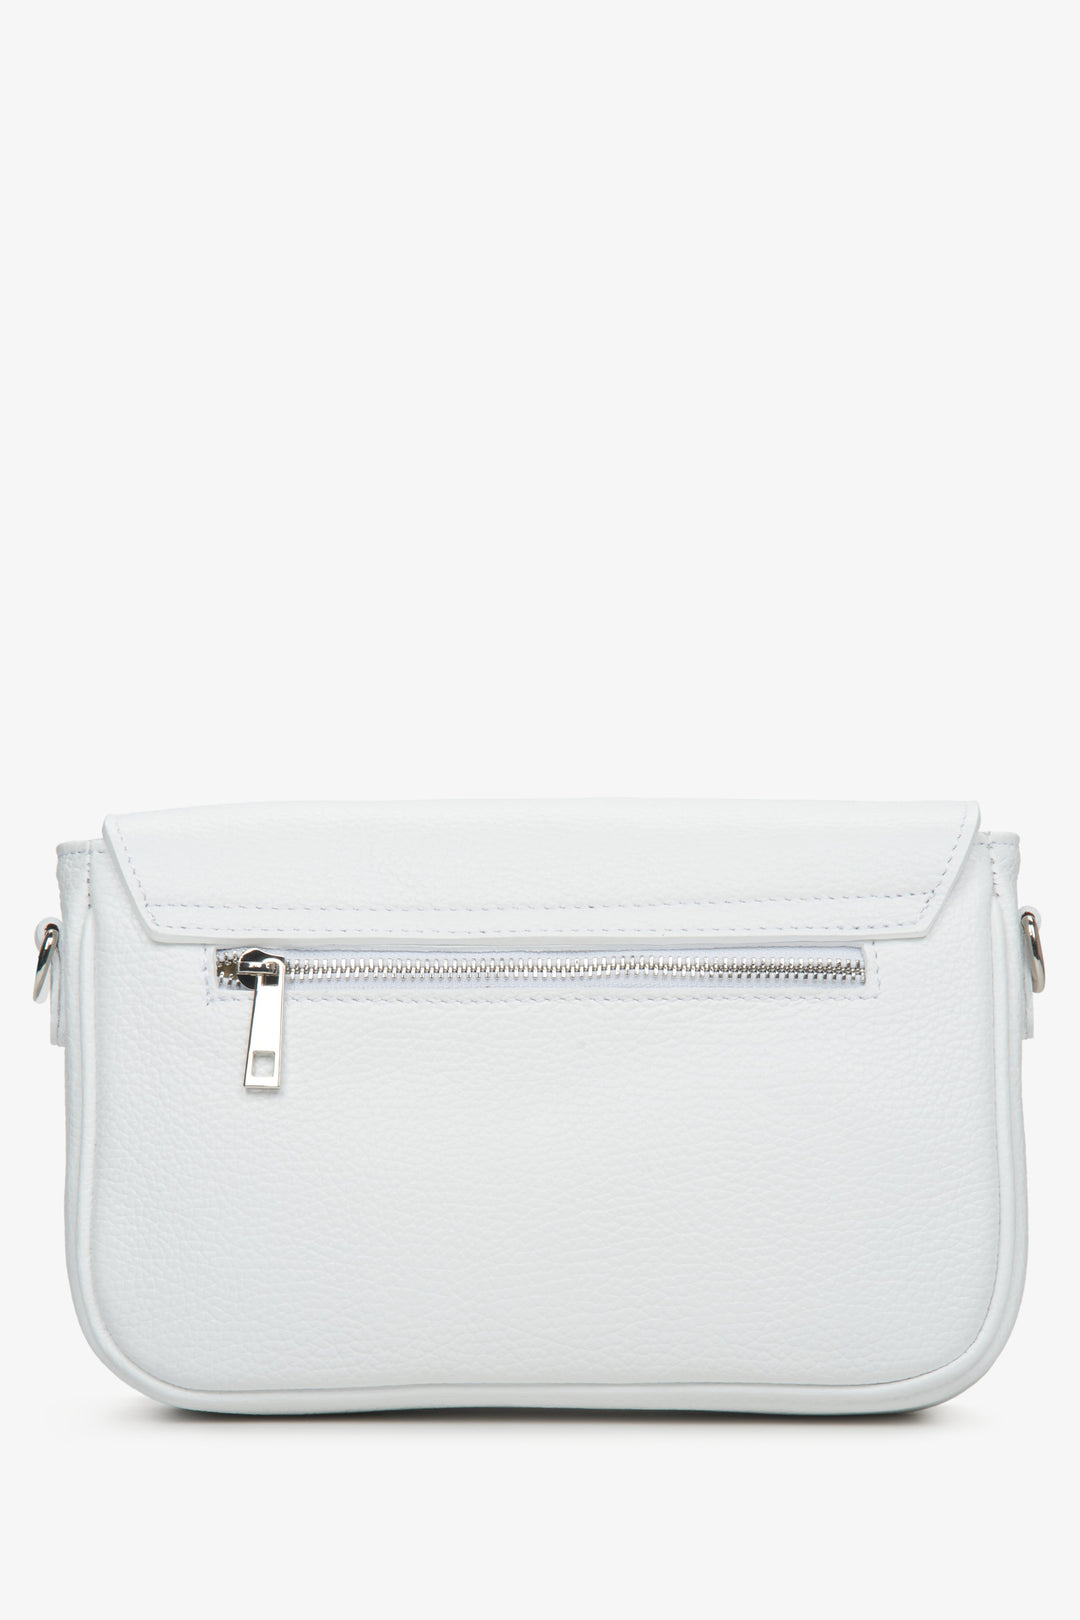 Women's leather handbag of Italian production Estro - presentation of the model in white on the back.